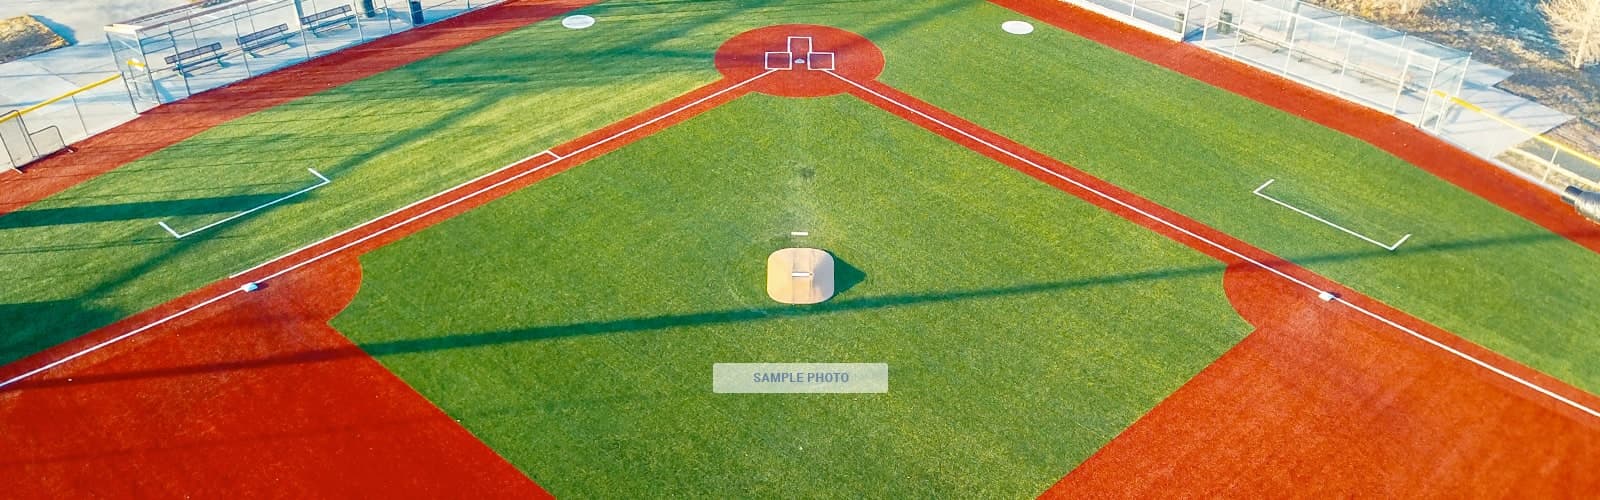 Merritt Island High School Field - Baseball in Merritt Island Florida